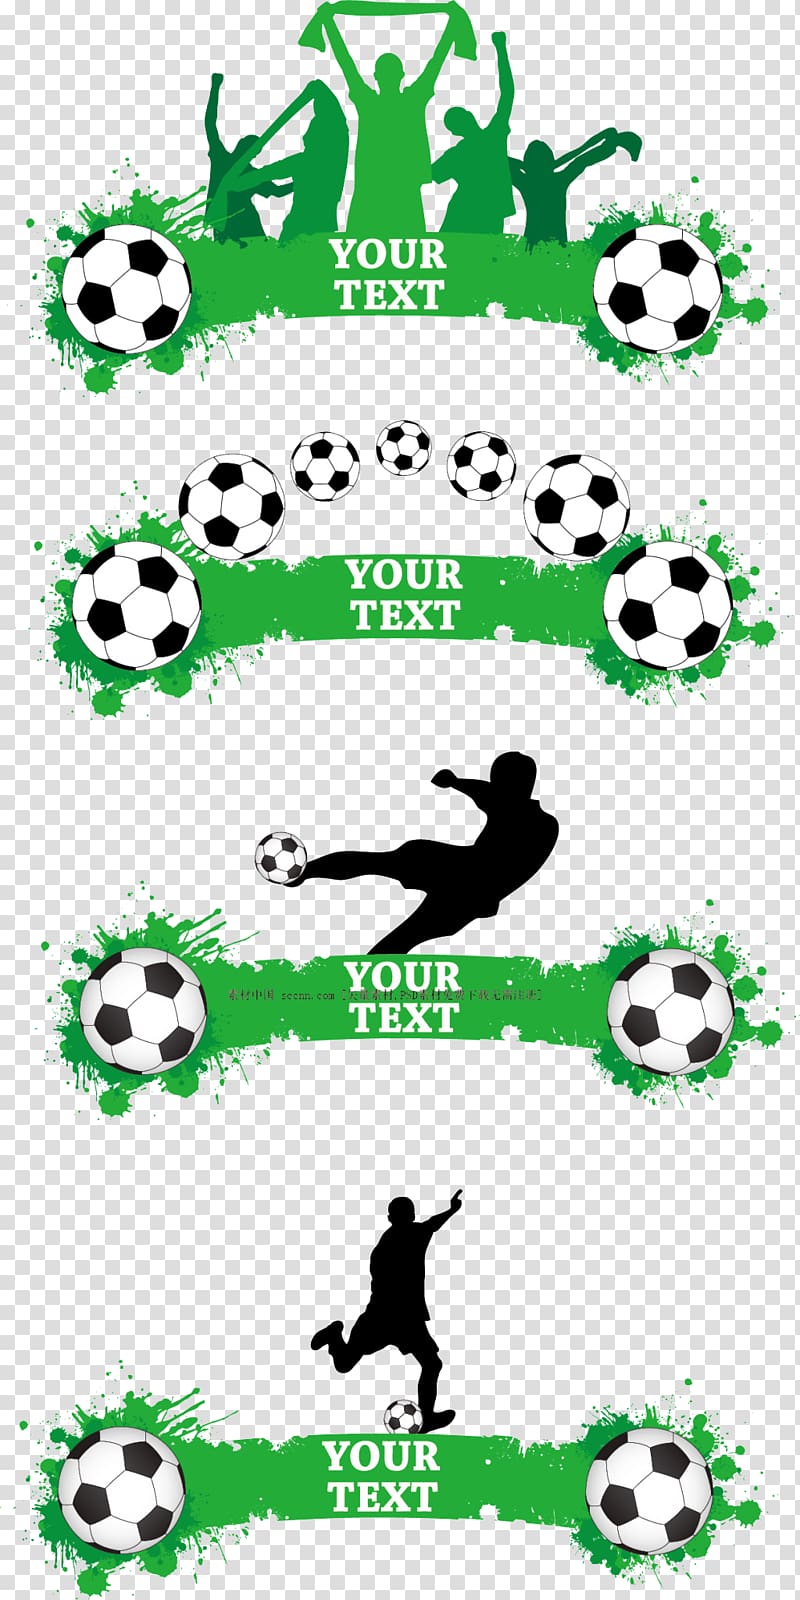 Football Banner, Football theme banner , soccer ball illustration transparent background PNG clipart